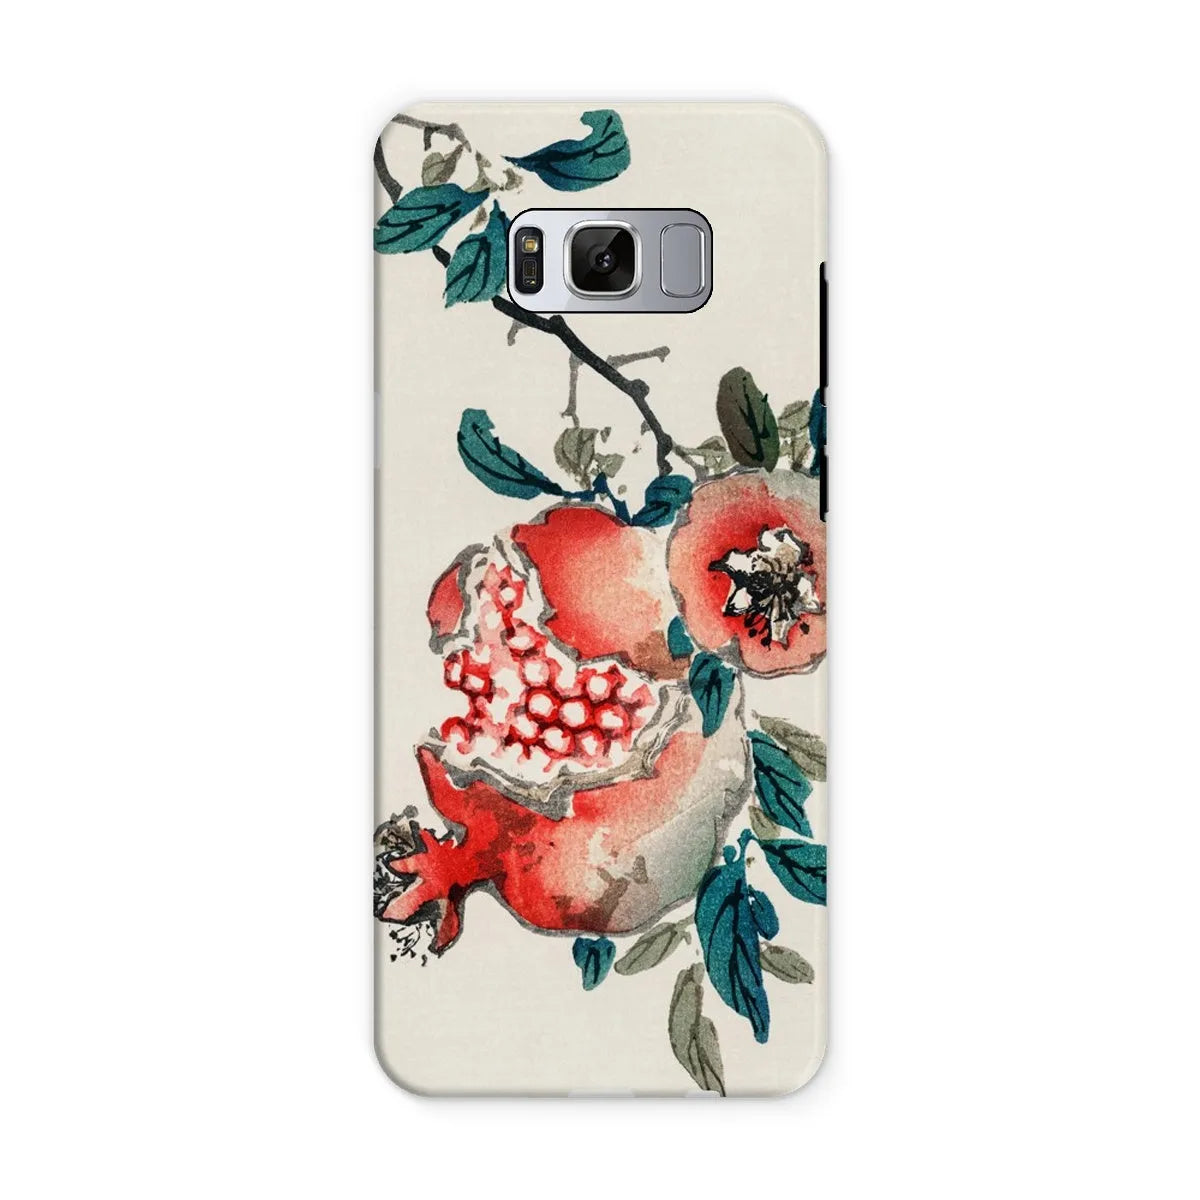 Pomegranate - Meiji Period Ukiyo-e Phone Case - Kōno Bairei - Samsung Galaxy S8 / Matte - Mobile Phone Cases